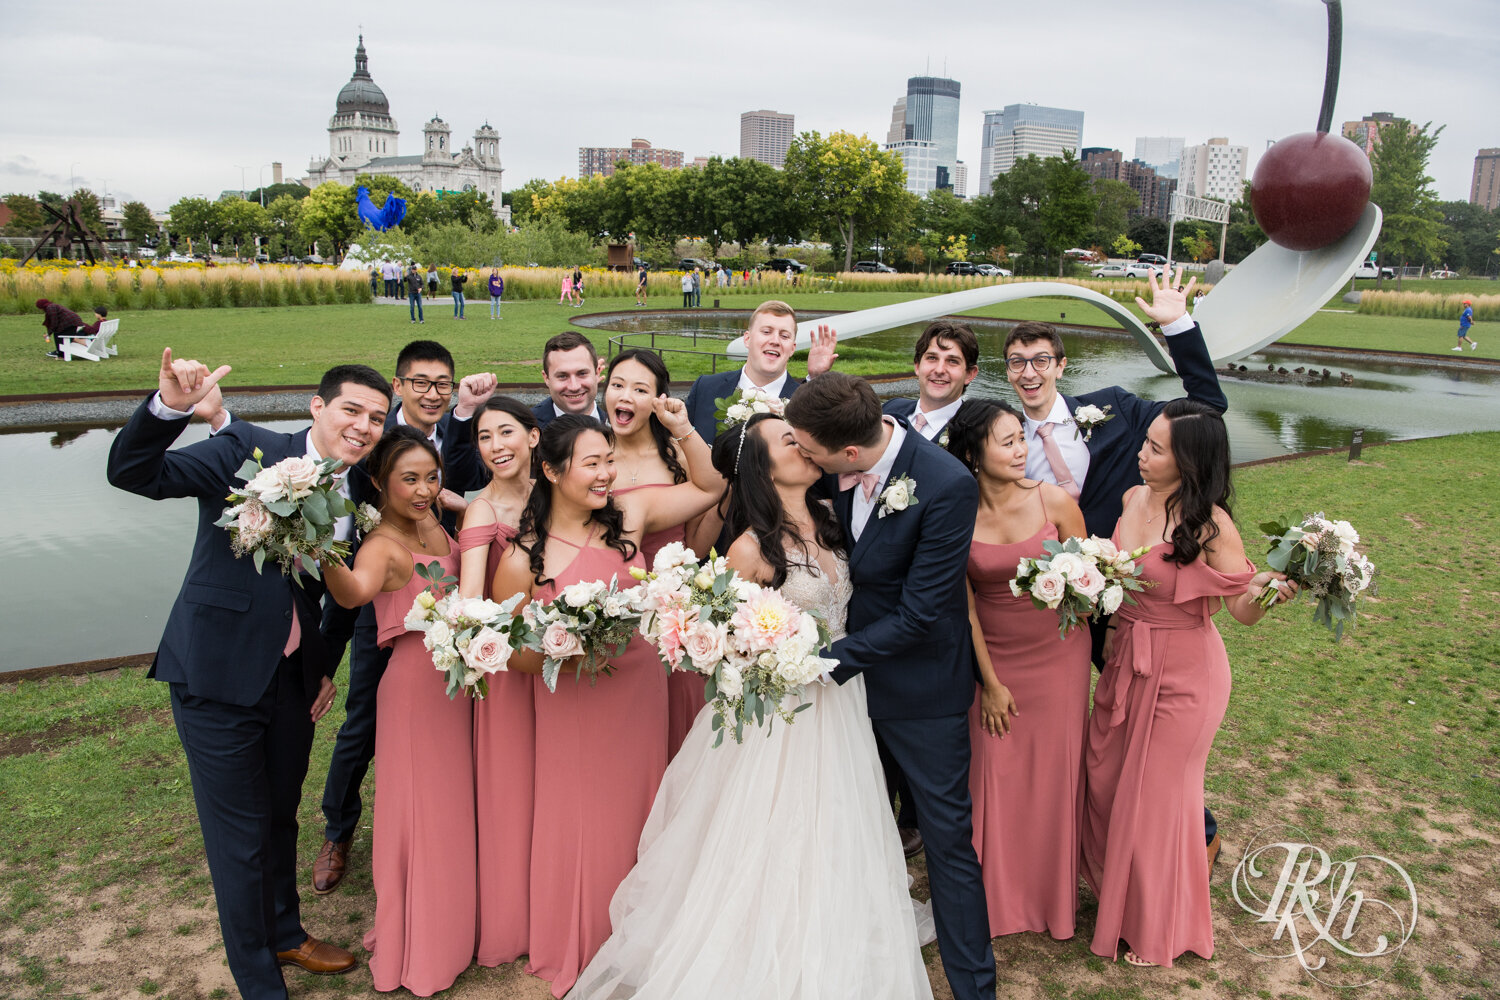 Asian bride and groom kiss in front of wedding party in Sculpture Garden in Minneapolis, Minnesota.